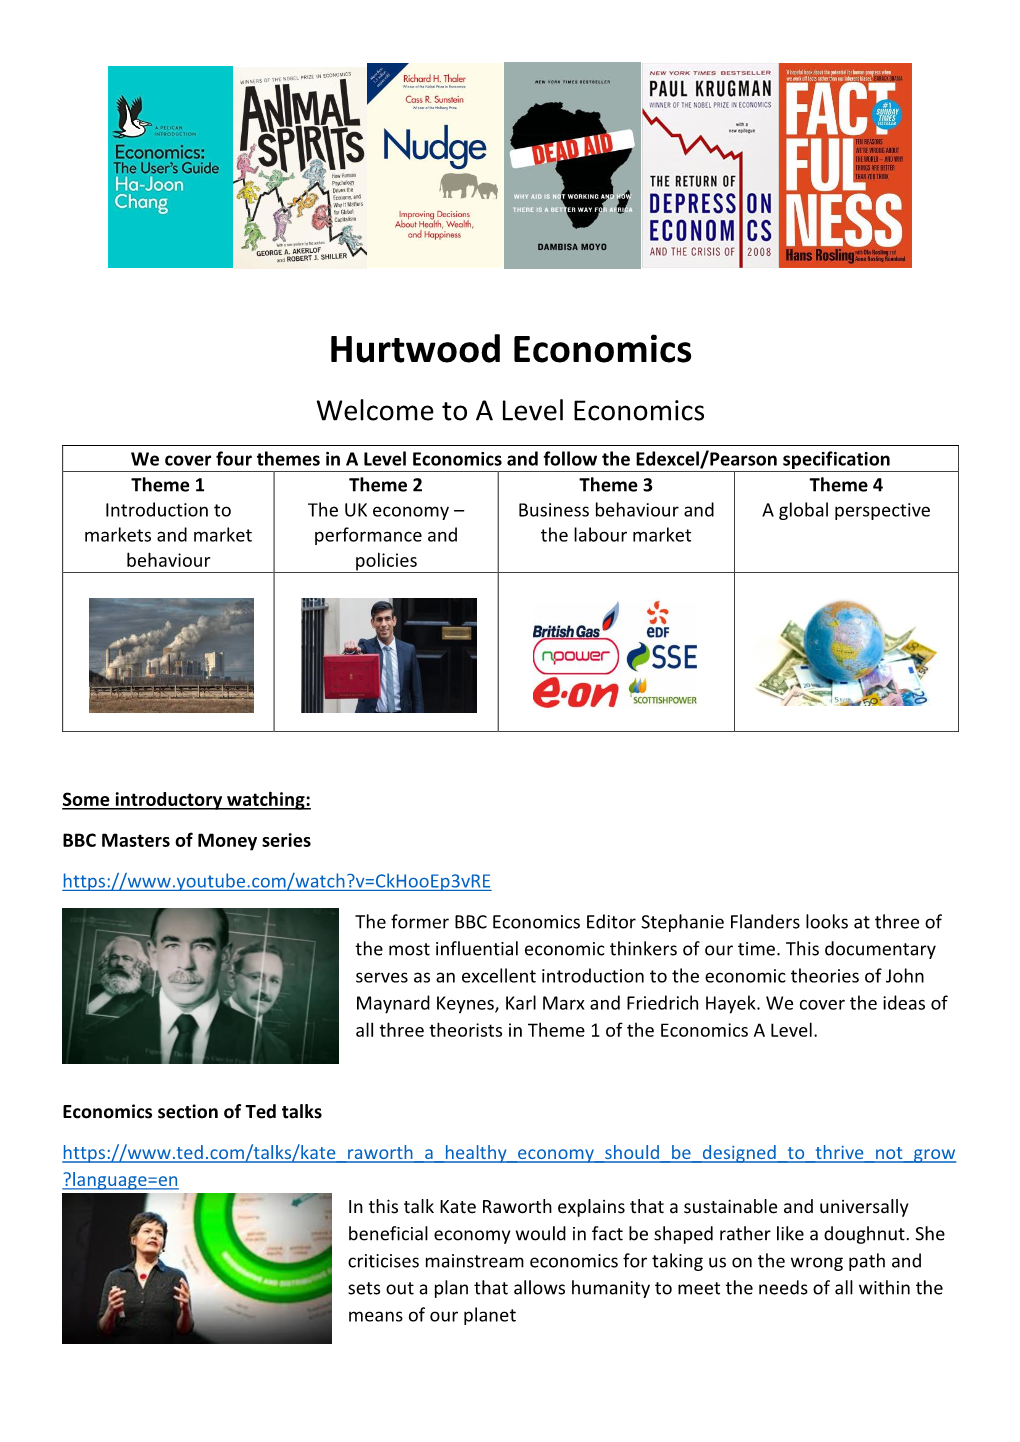 Hurtwood Economics Welcome to a Level Economics